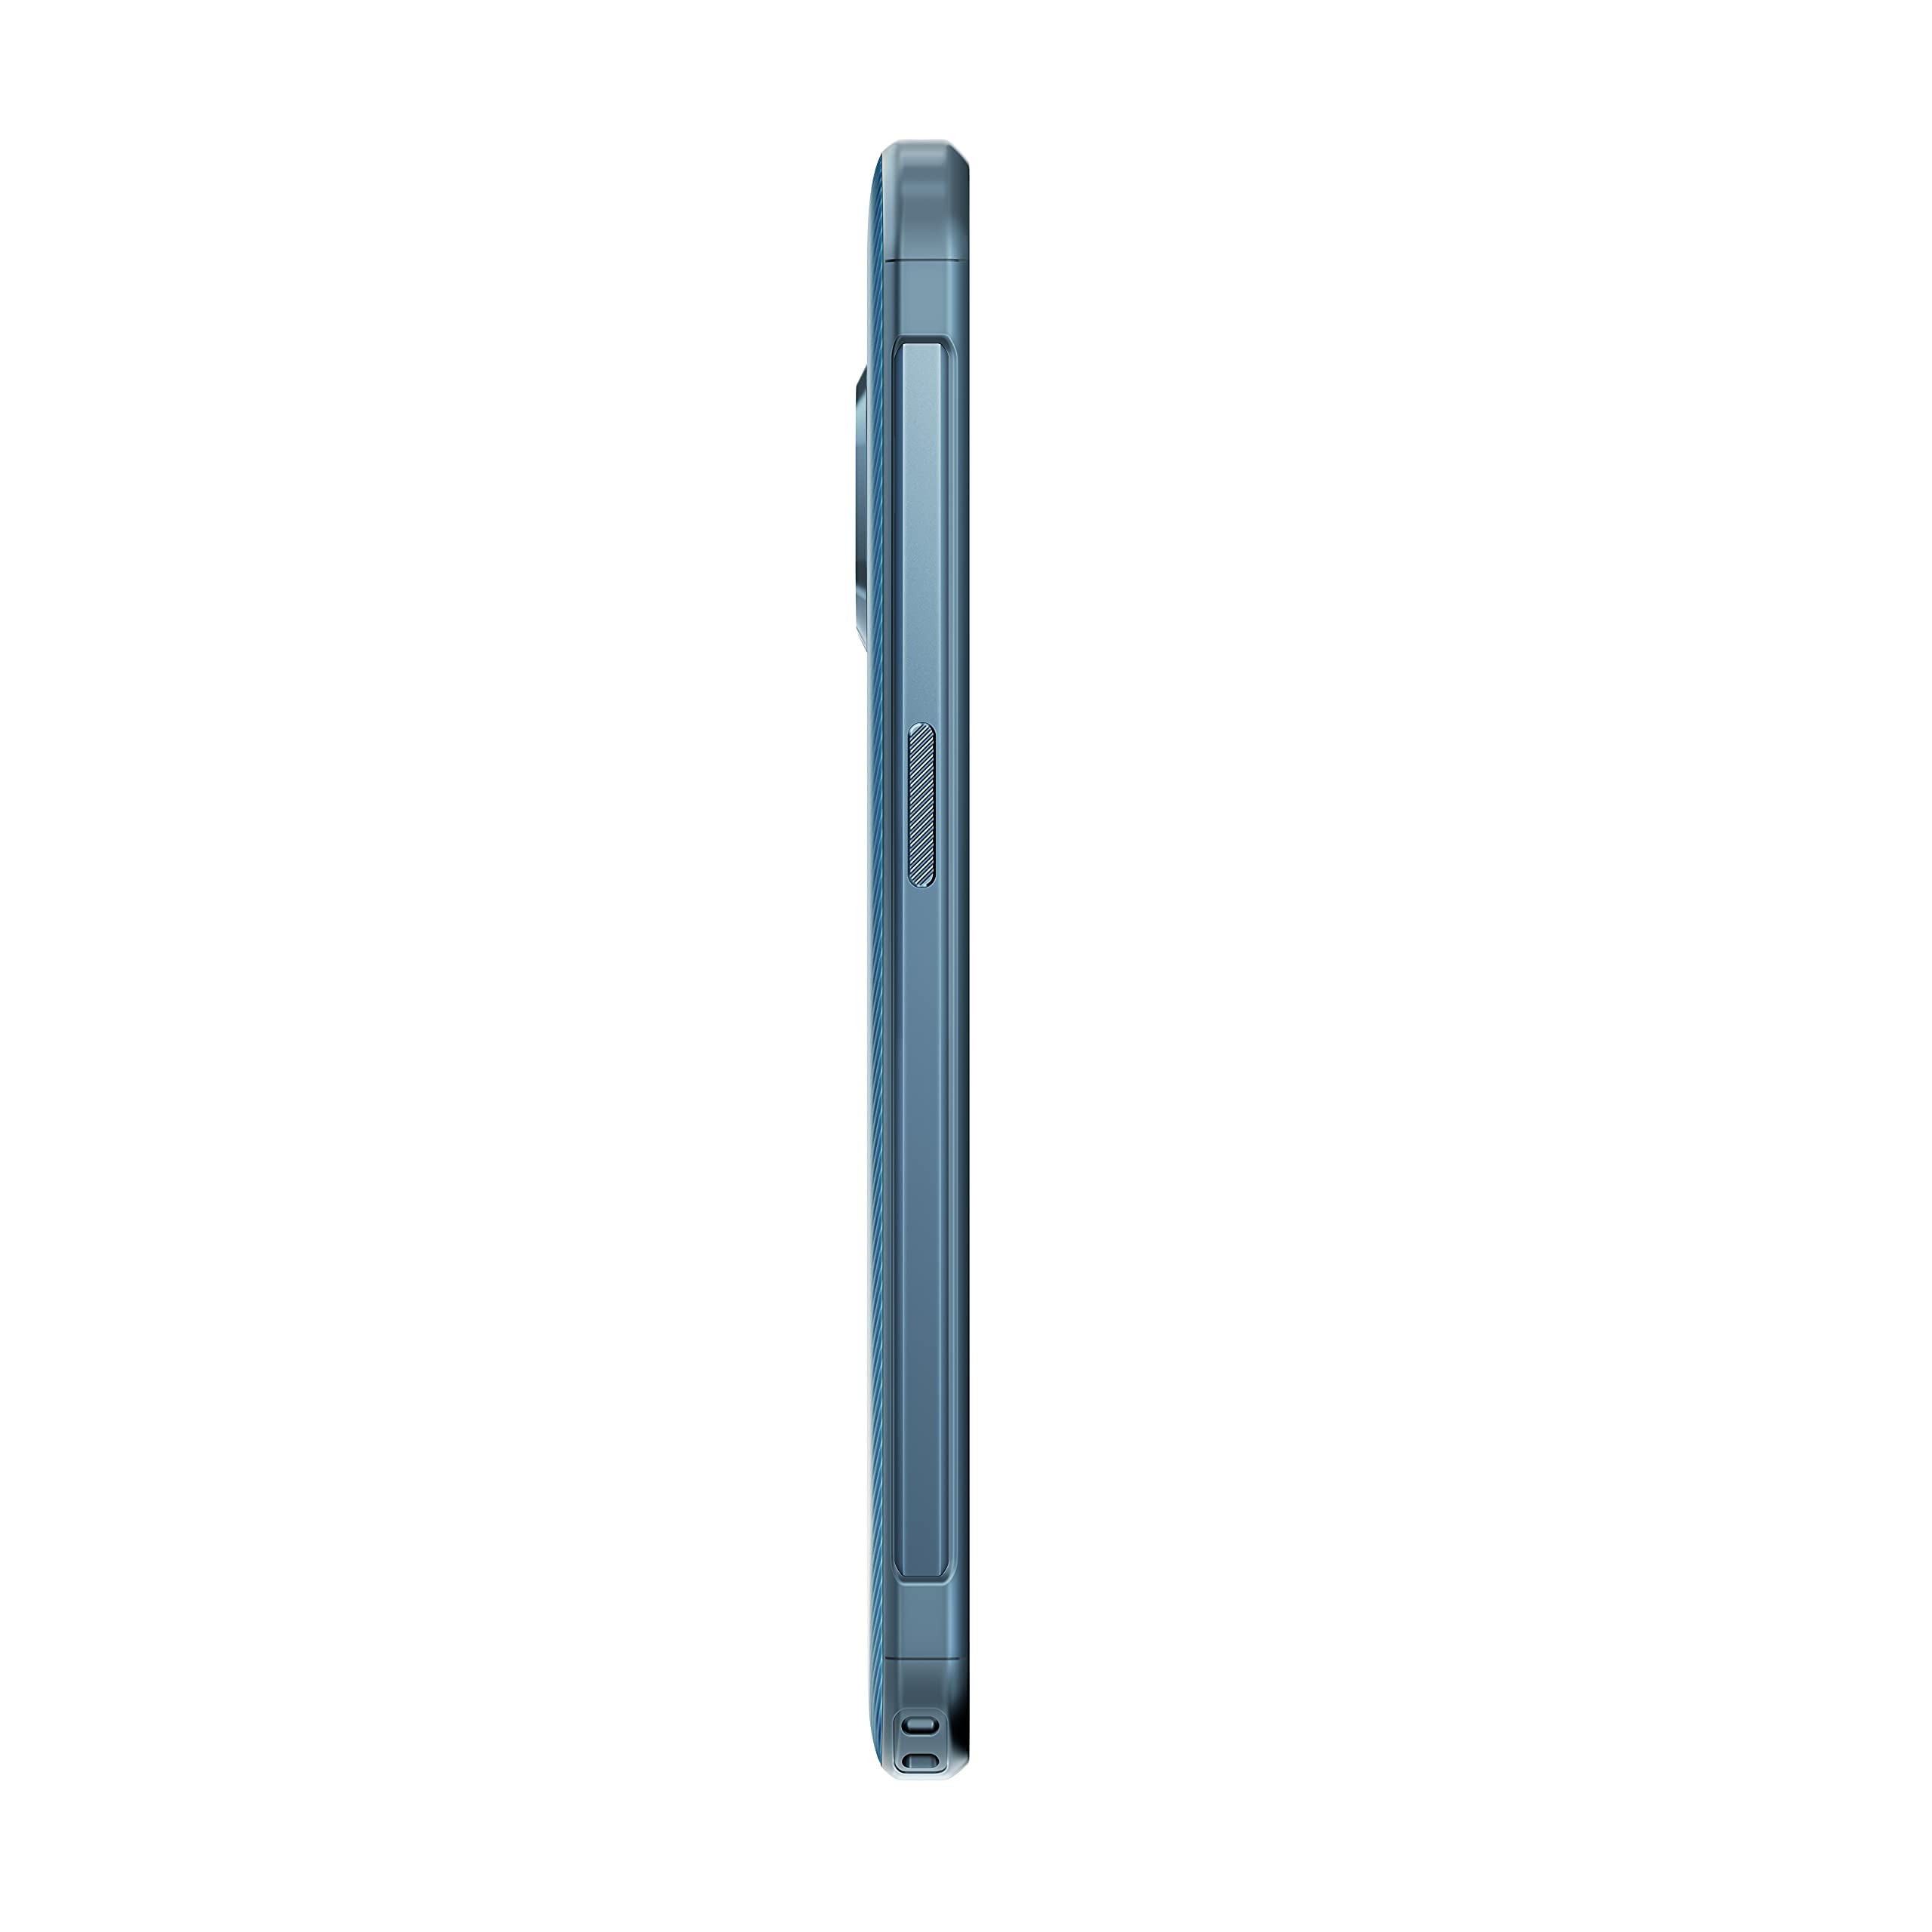 Nokia XR20 Dual-SIM 64GB ROM + 4GB RAM (GSM Only | No CDMA) Factory Unlocked 5G Smartphone (Ultra Blue) - International Version